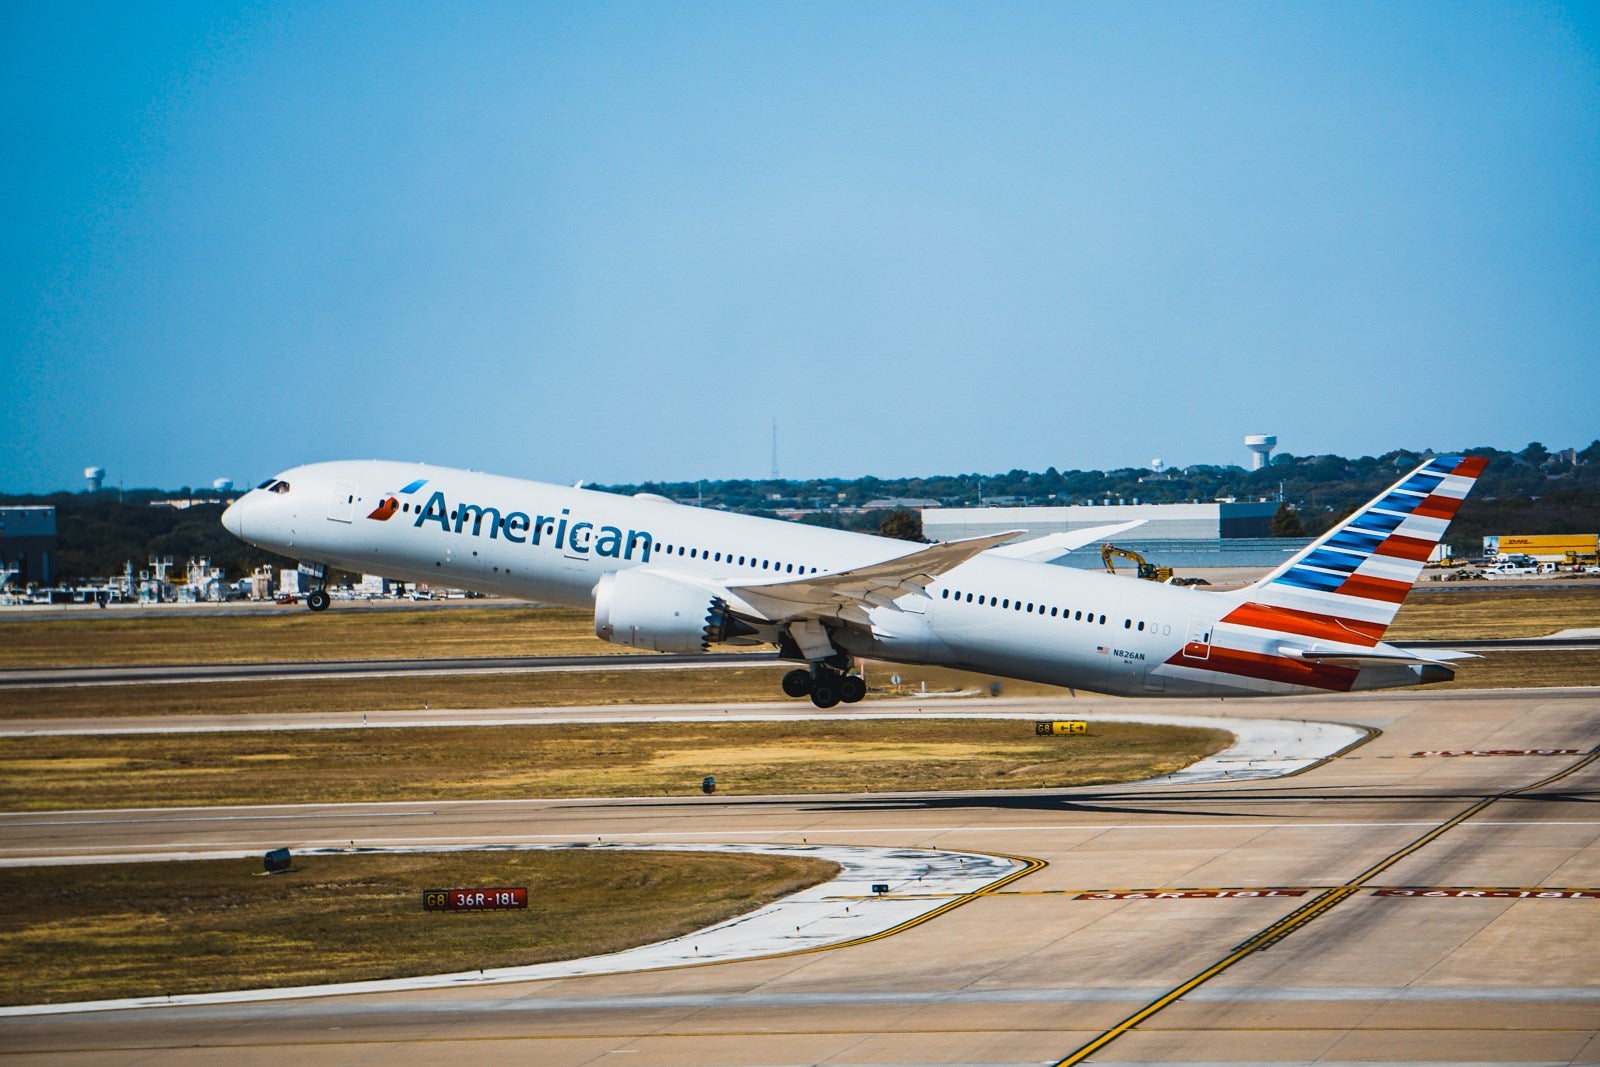 American Airlines returns to Shanghai after 10-month coronavirus hiatus